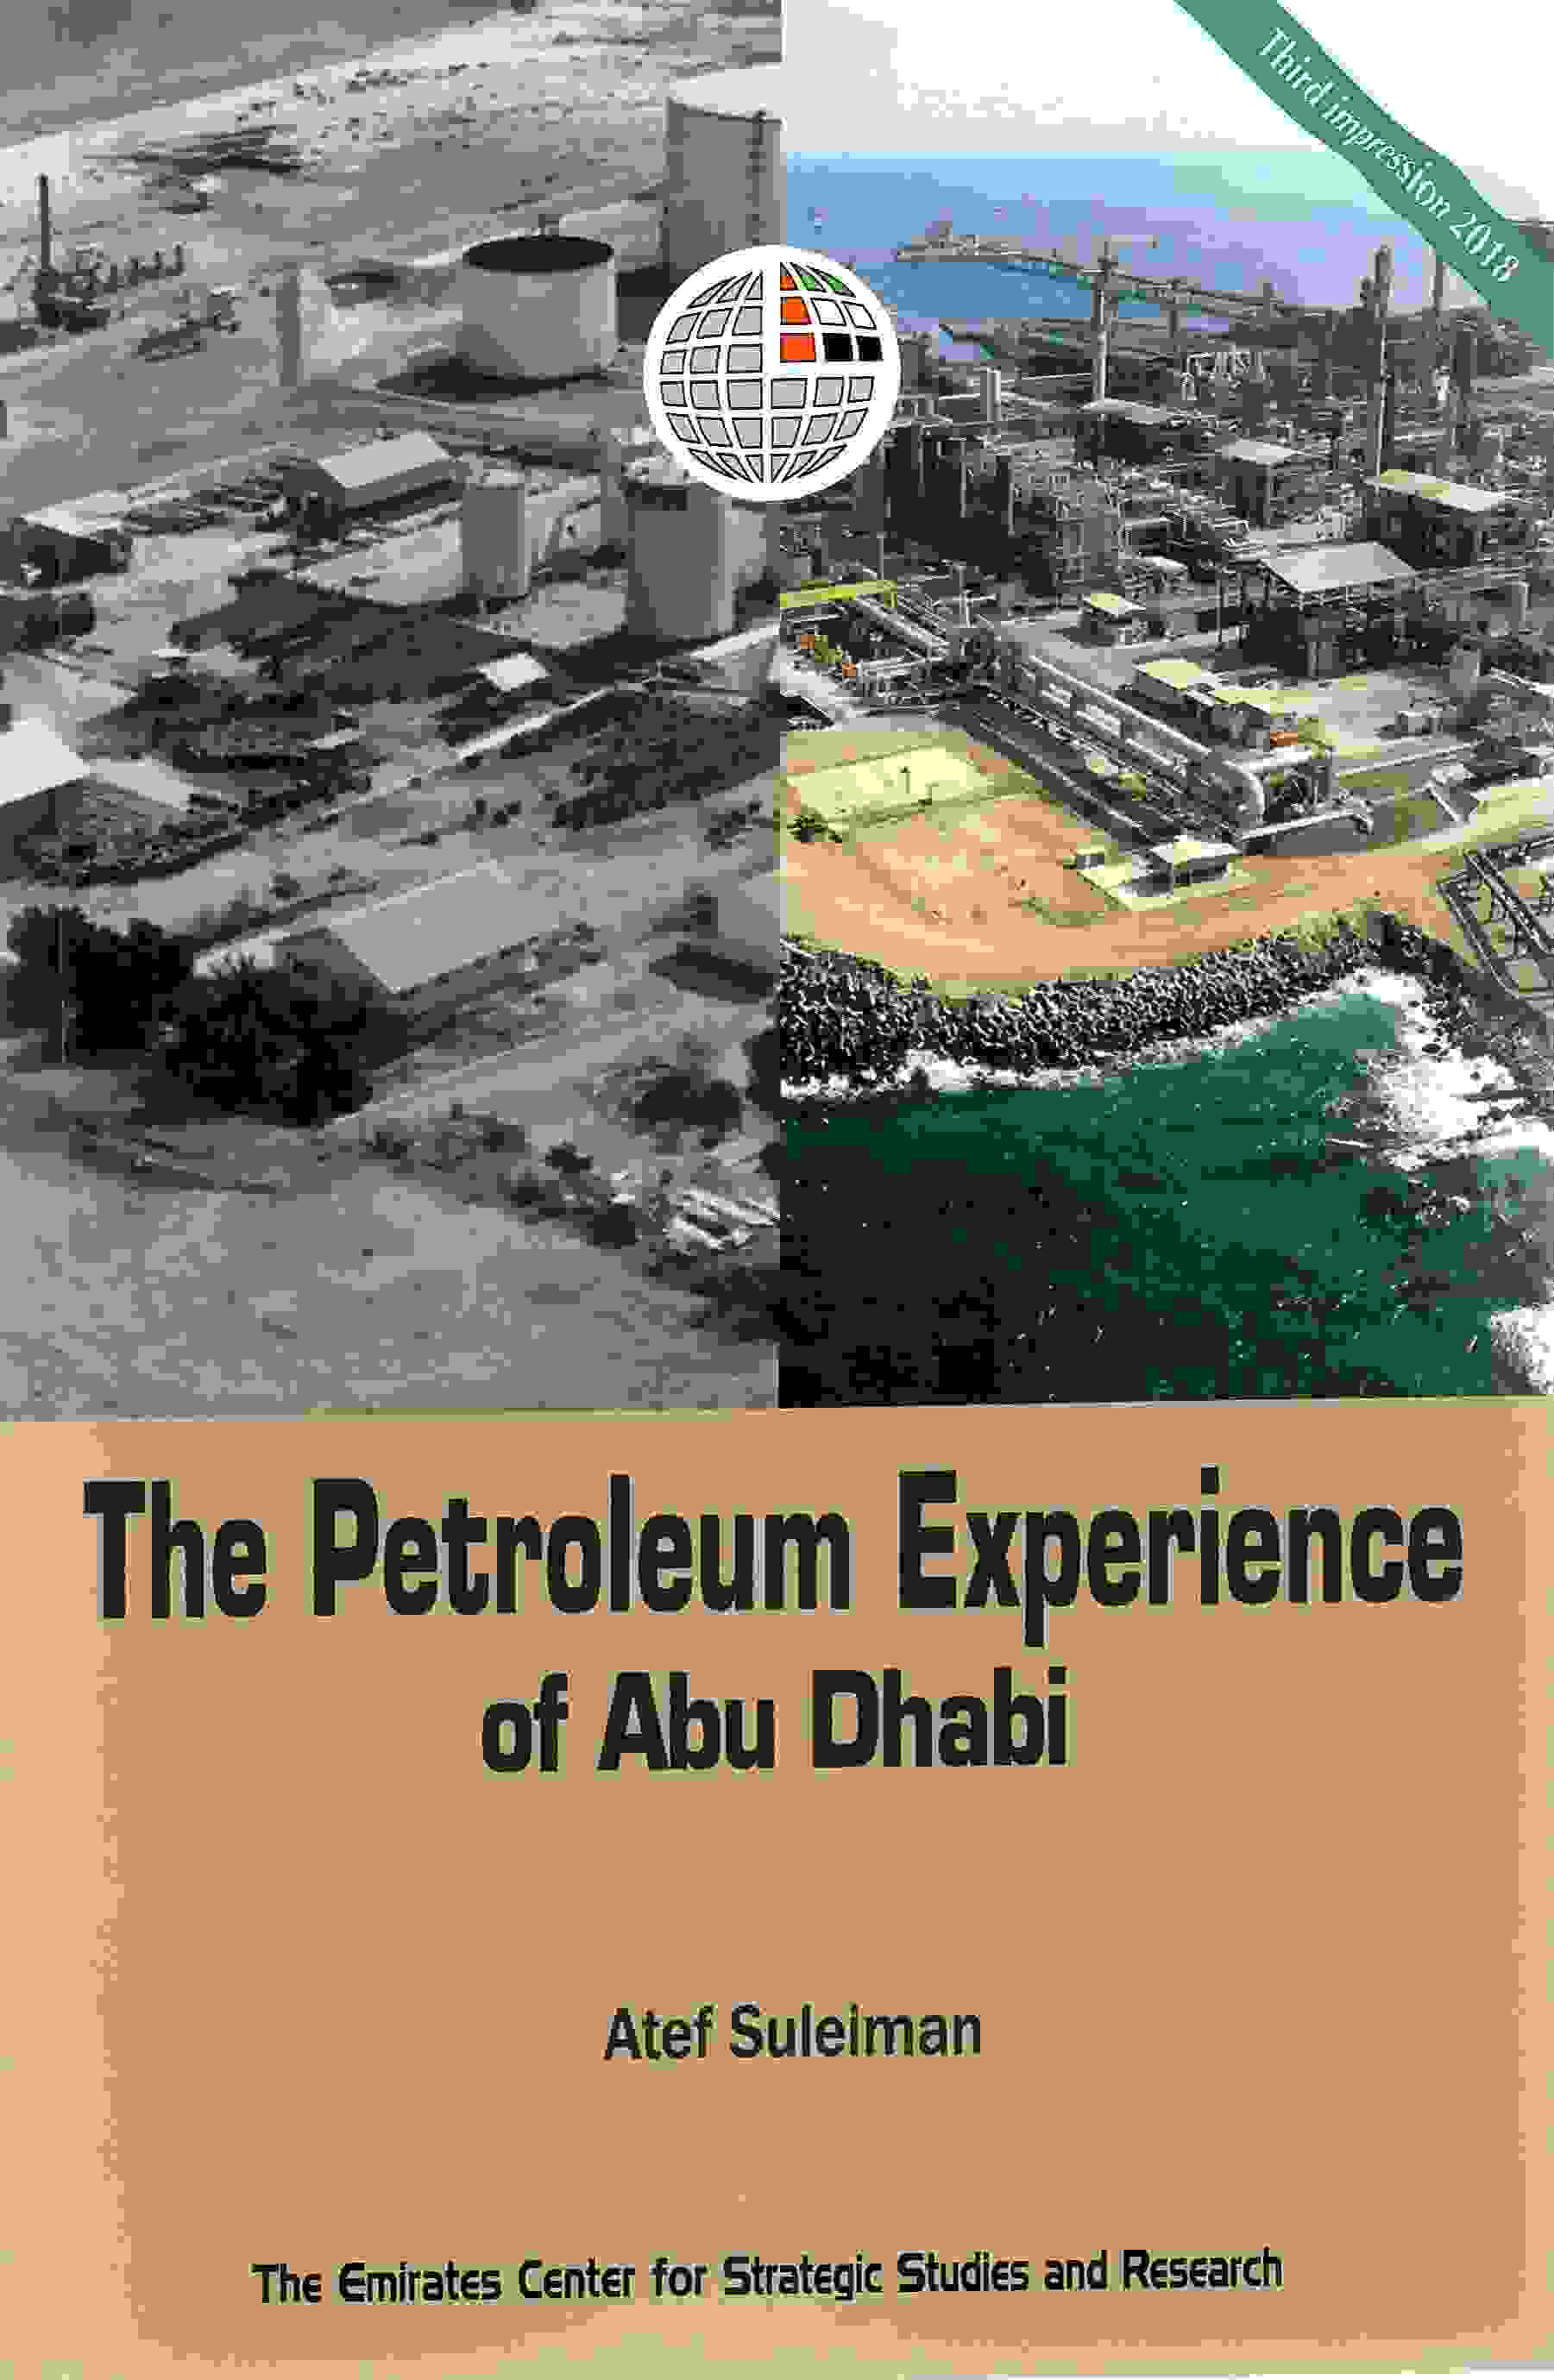 THE PETROLEUM EXPERIENCE OF ABU DHABI